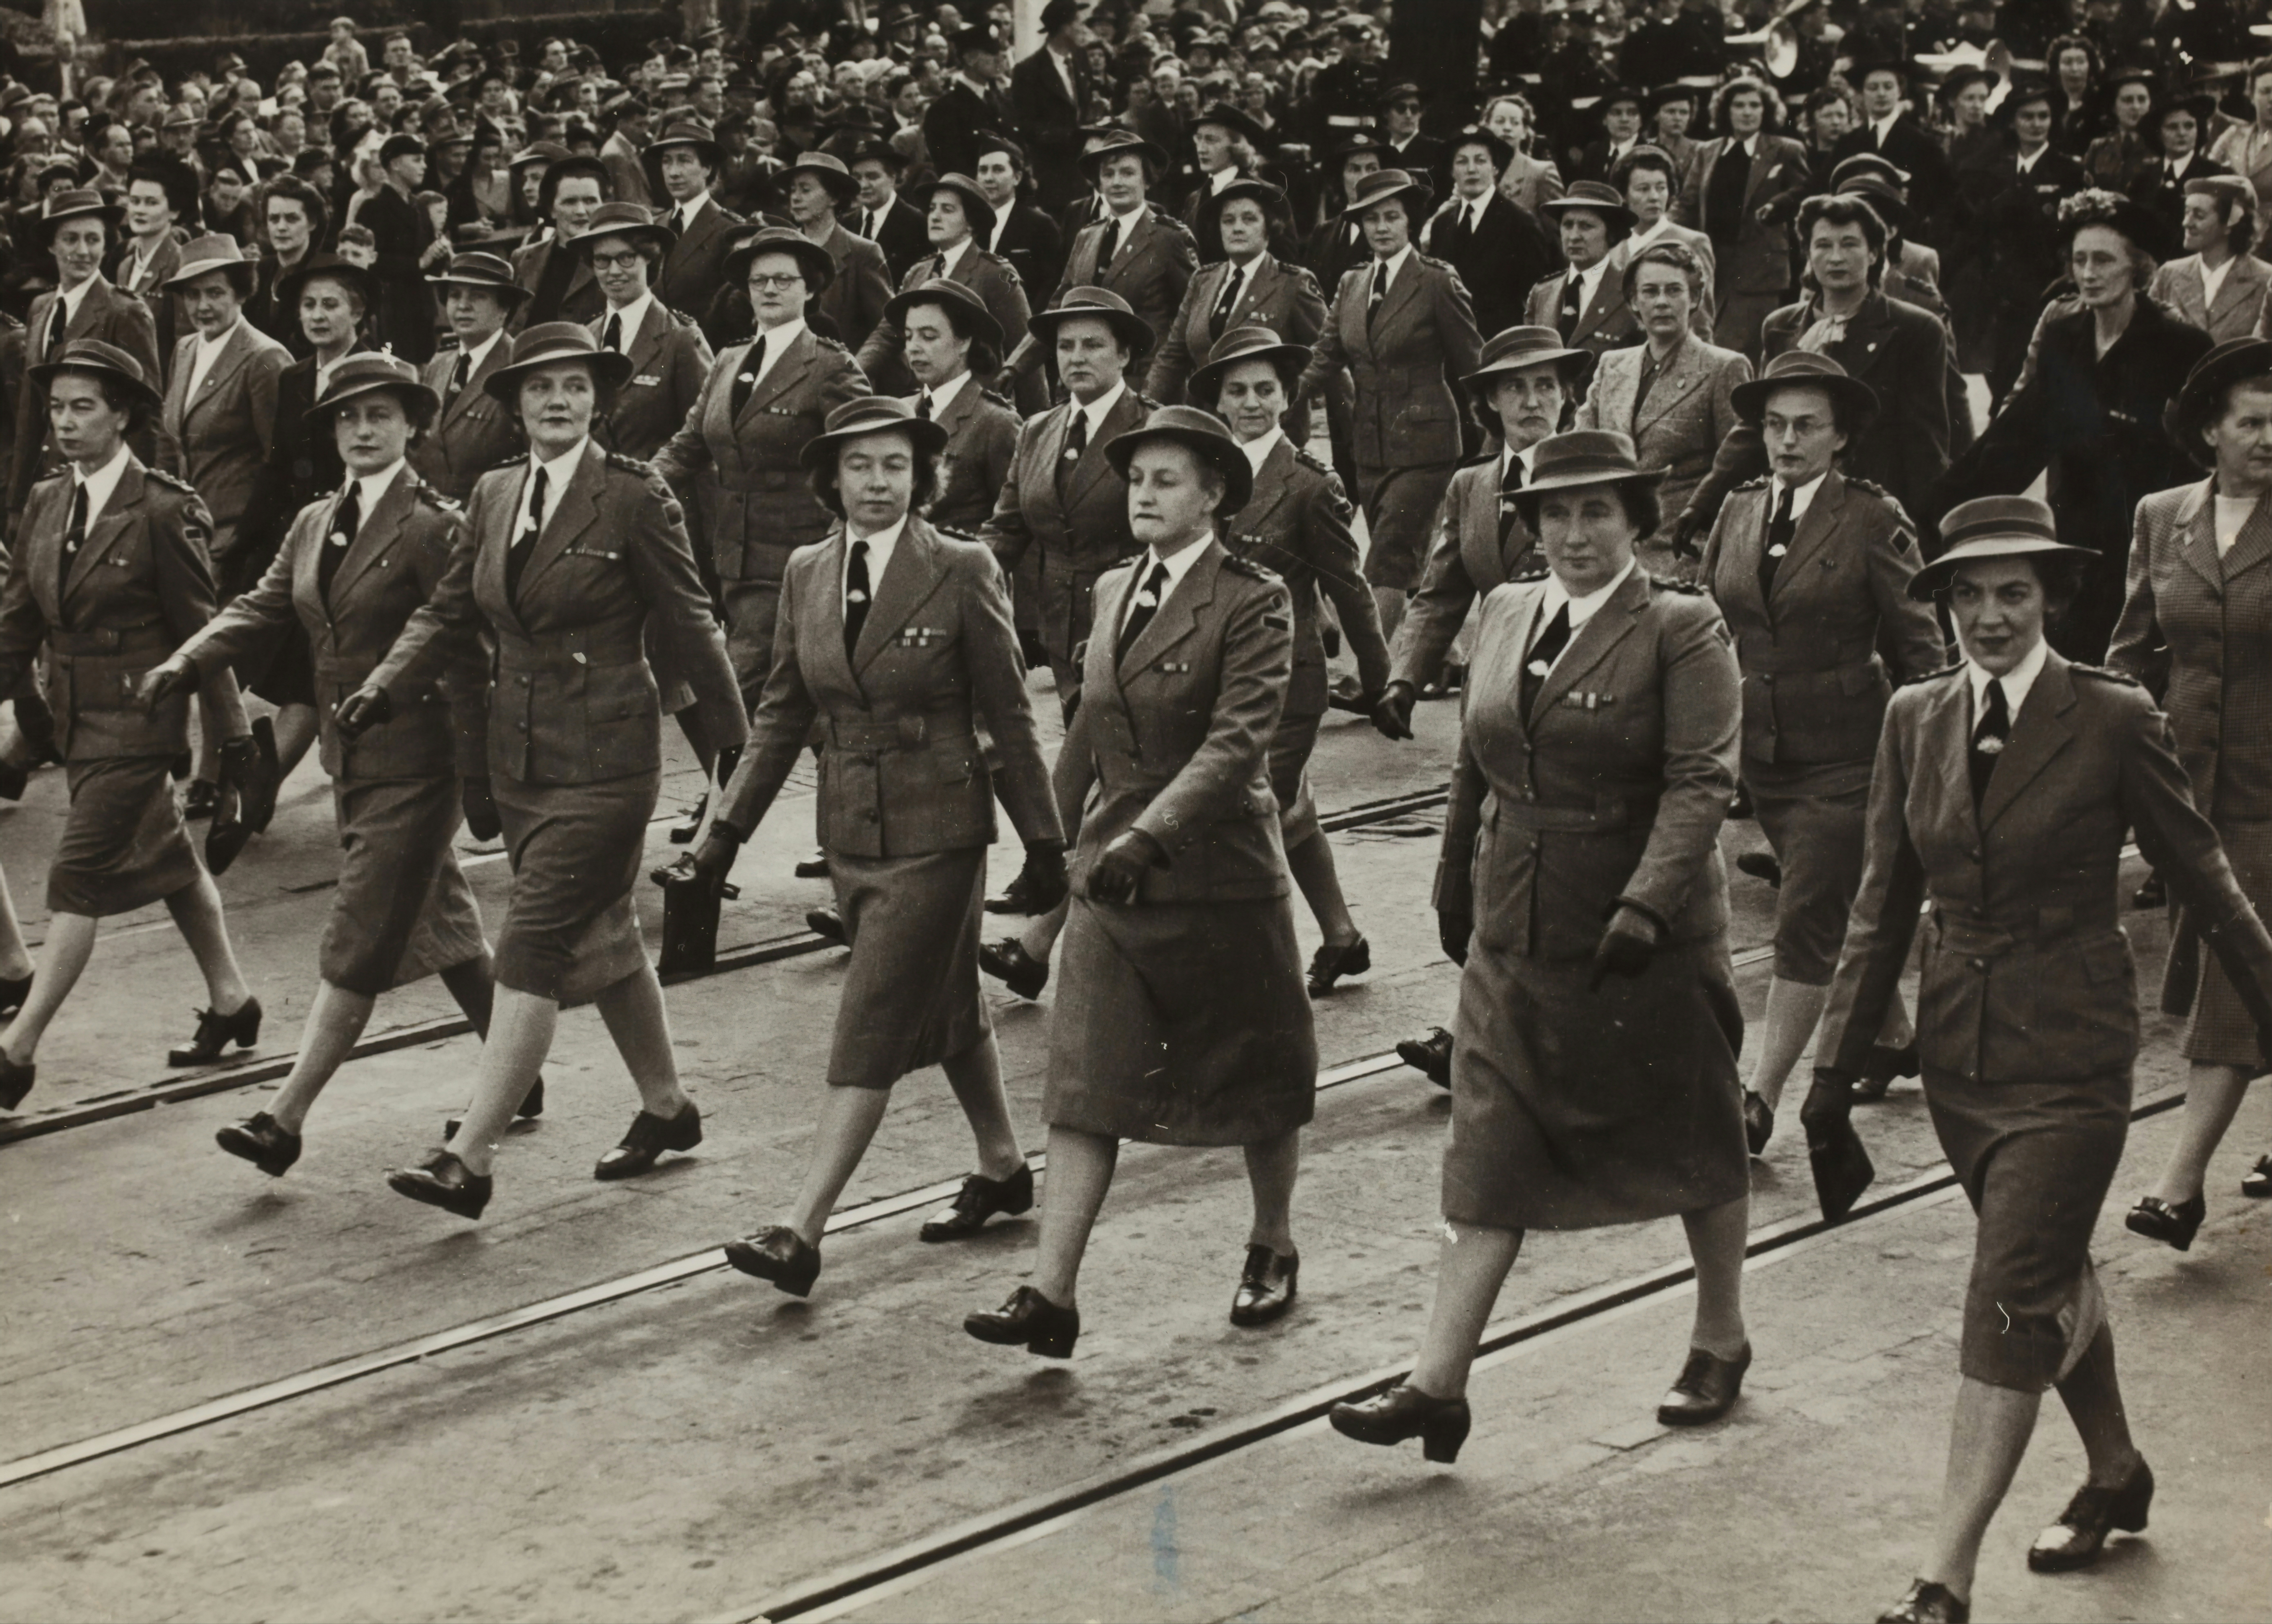 Nurses Marching, 7th Australian General Hospital, Sister Isabel Erskine Plante, World War II, circa 1942